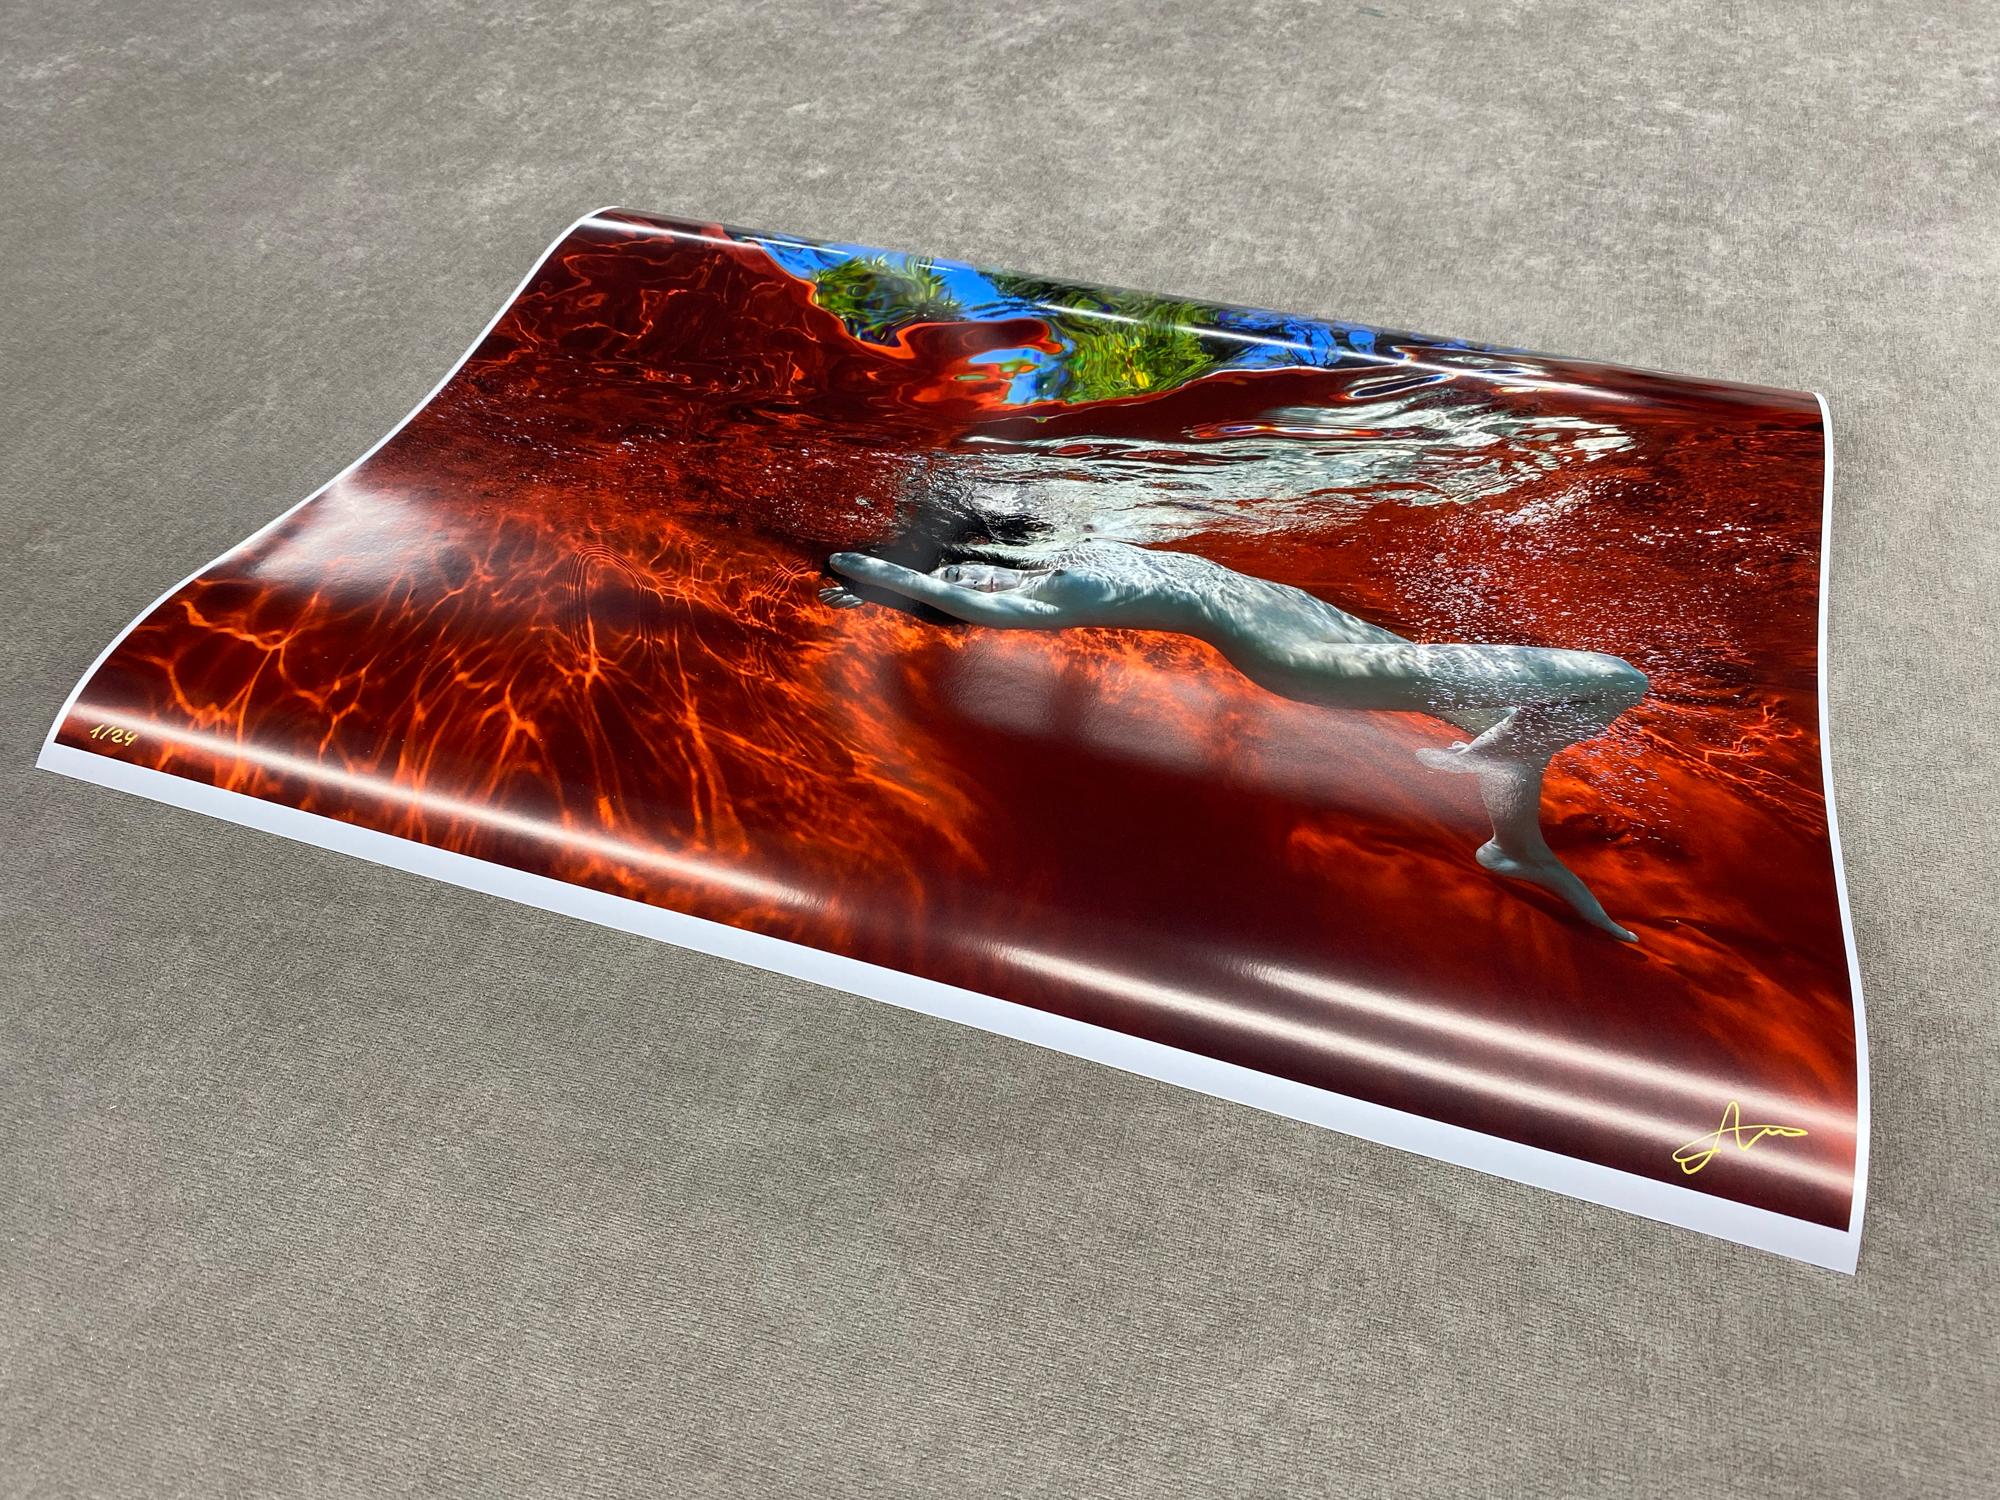 Garden Pool - underwater nude photograph - print on paper 25.3x35